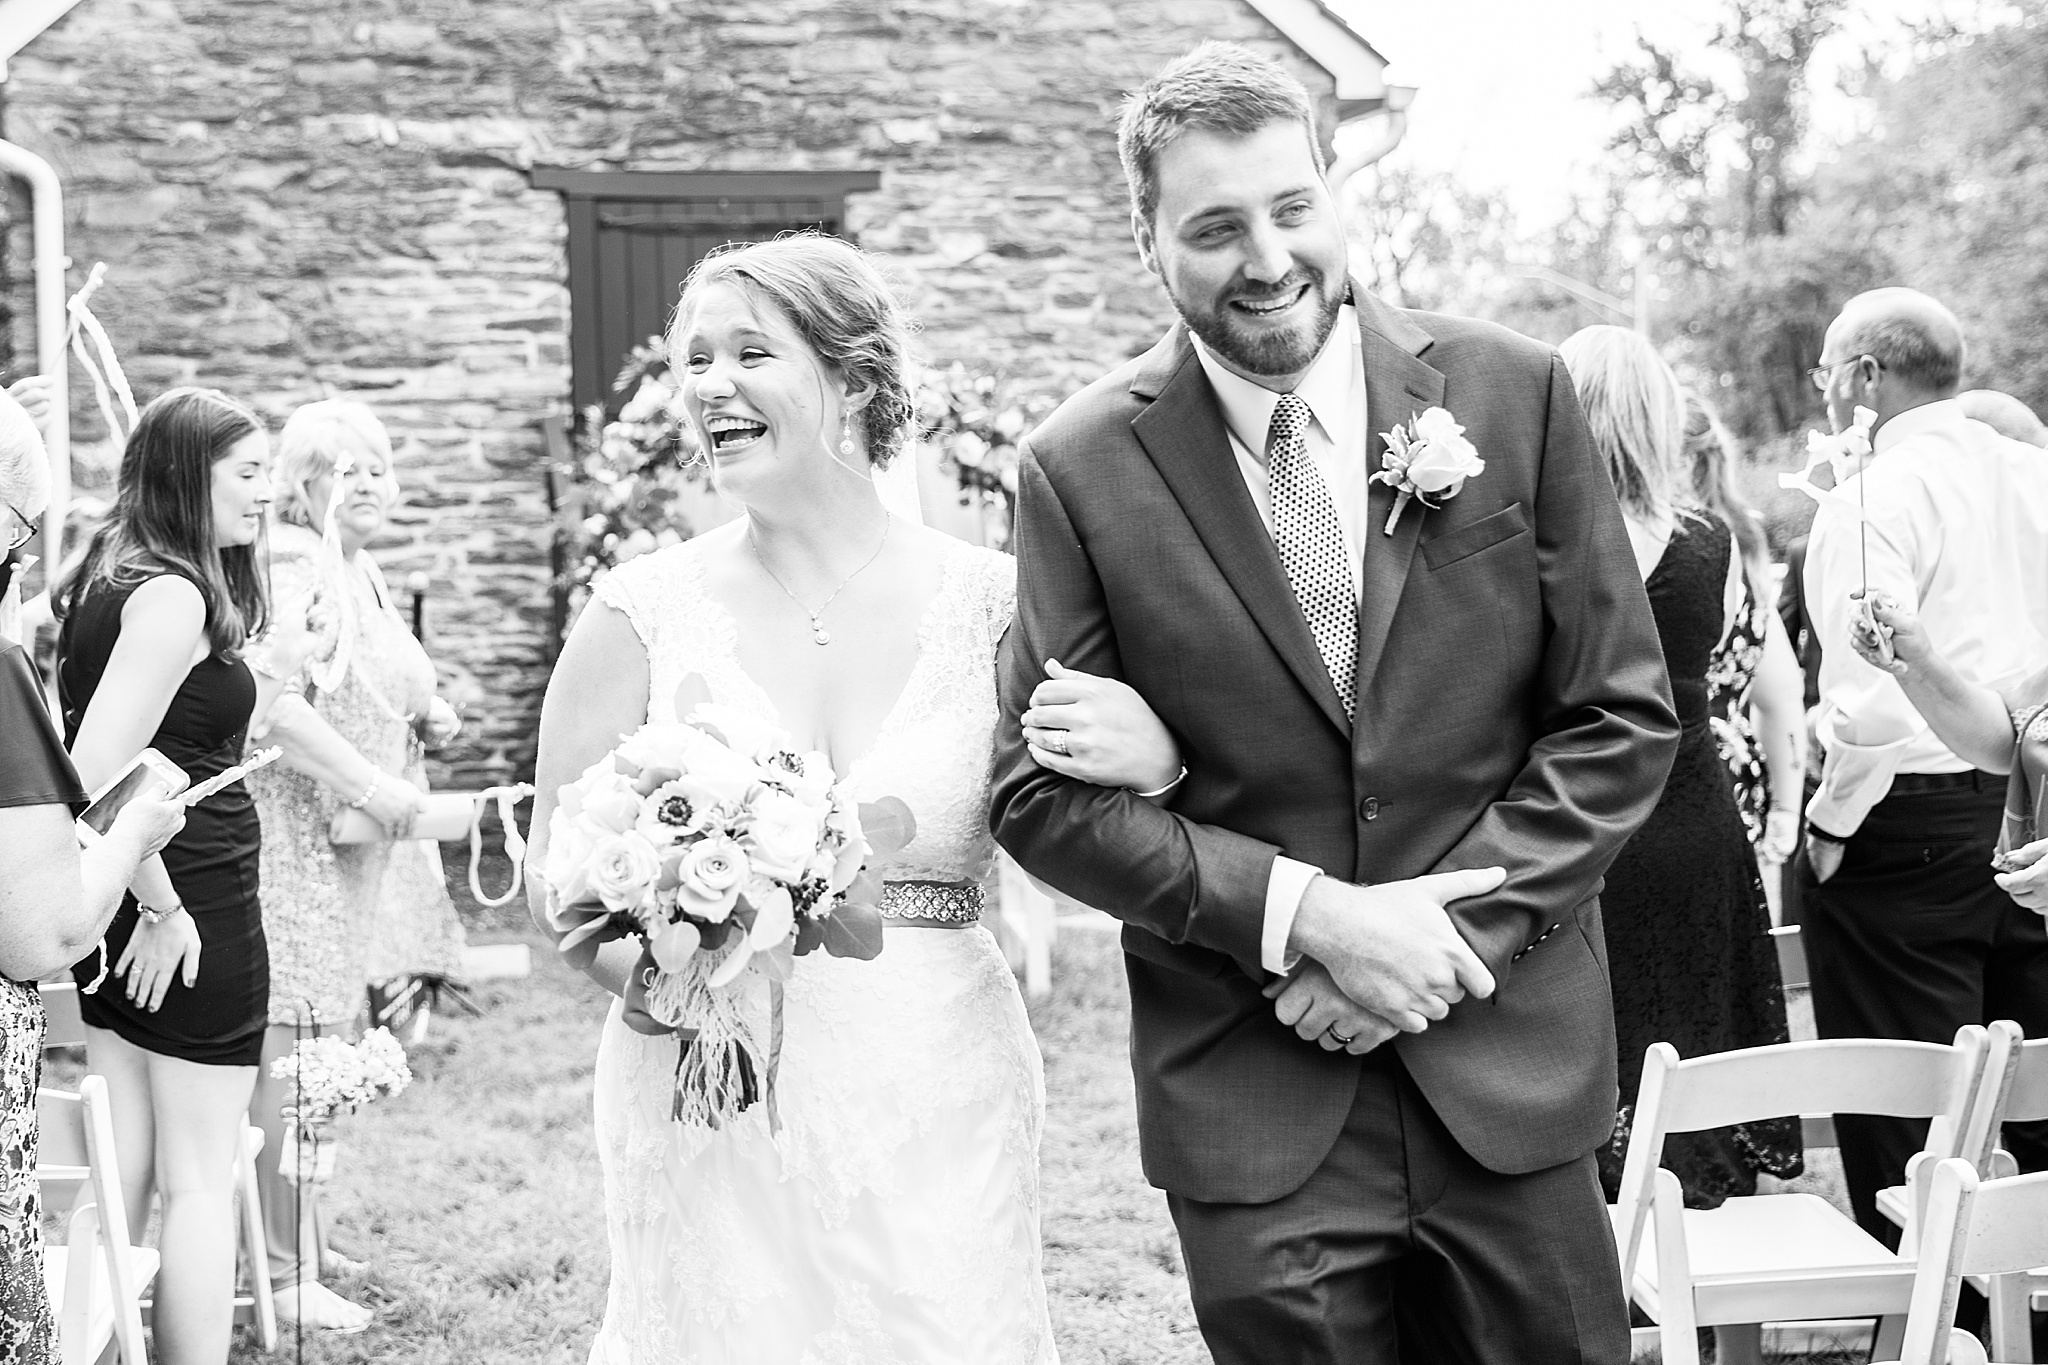 newlyweds process up aisle photographed by Alexandra Mandato Photography